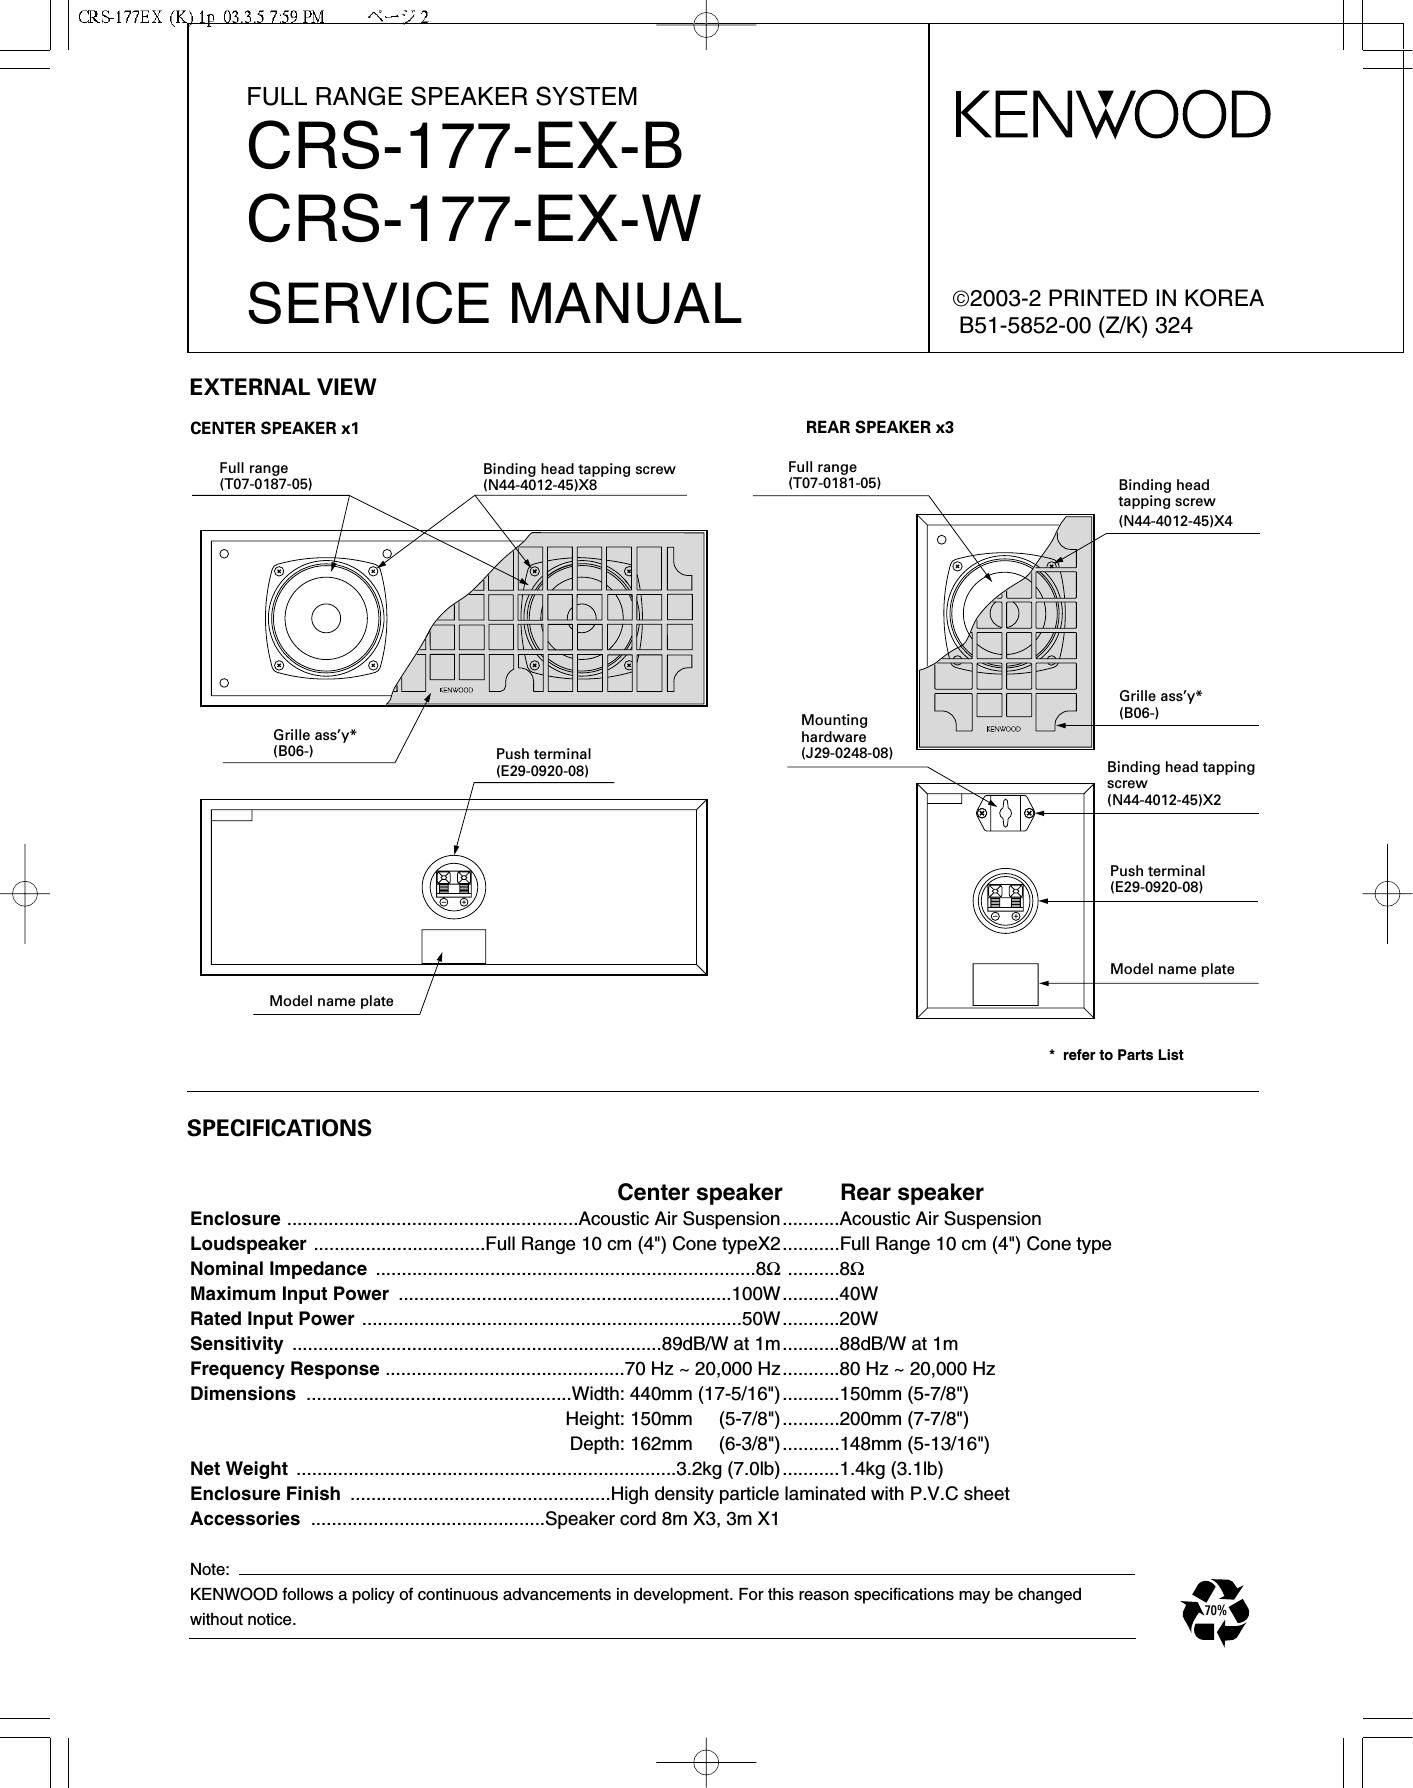 Kenwood CRS 177 EXW Service Manual